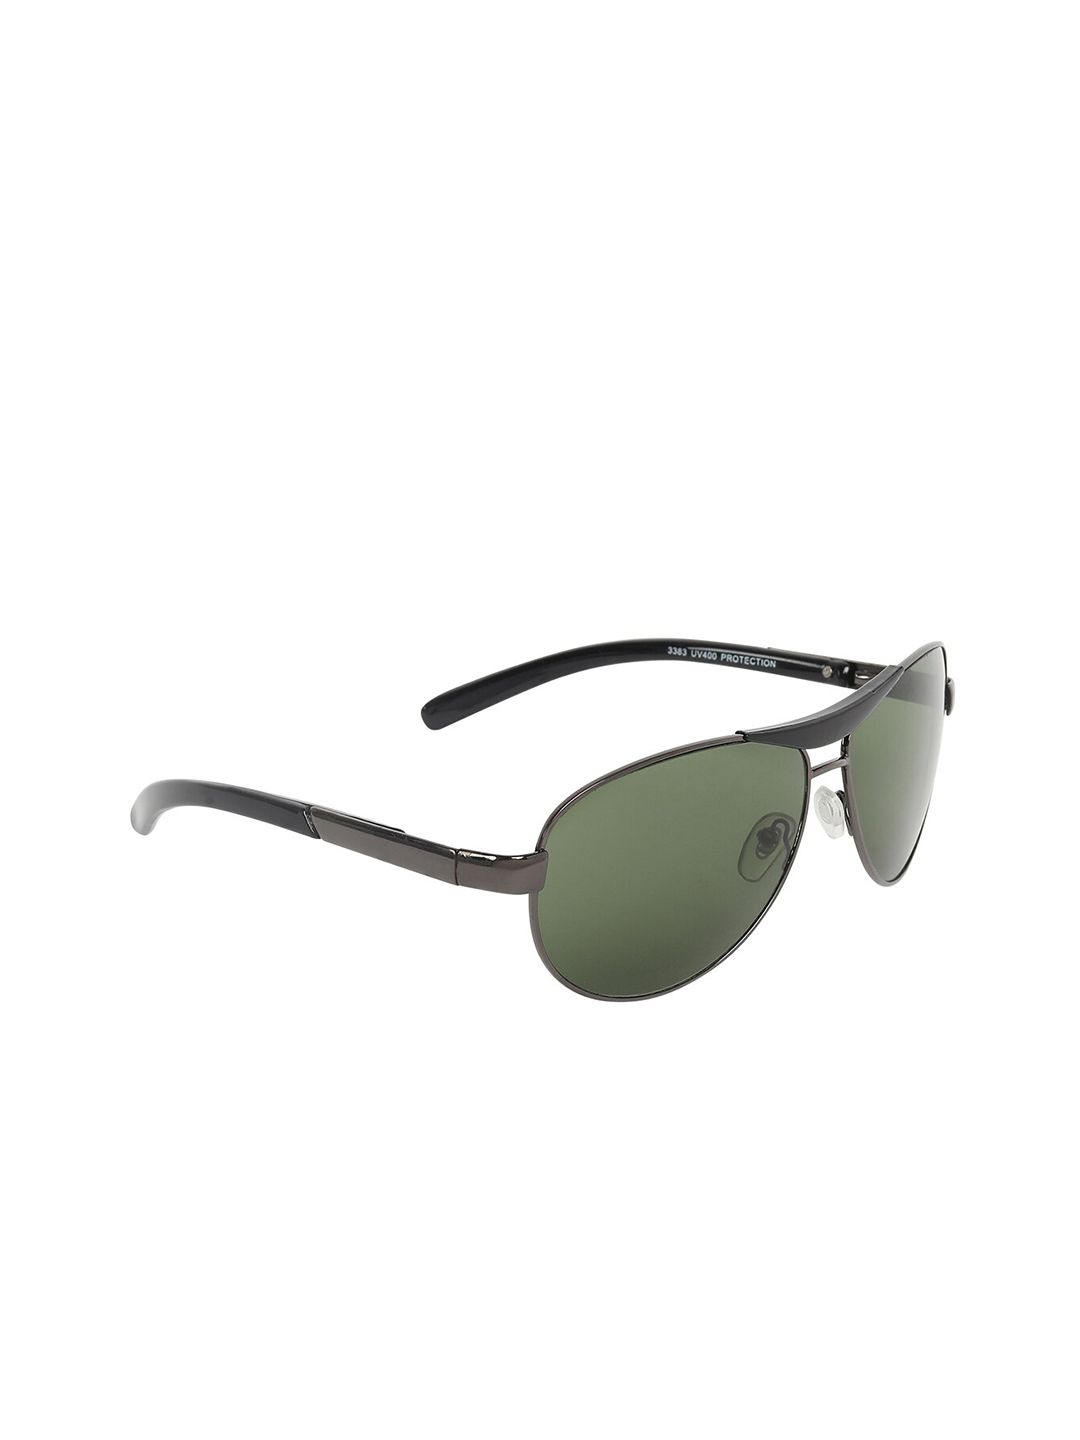 ALIGATORR Unisex Green UV Protected Aviator Sunglasses AGR_GREEN_BLACK Price in India